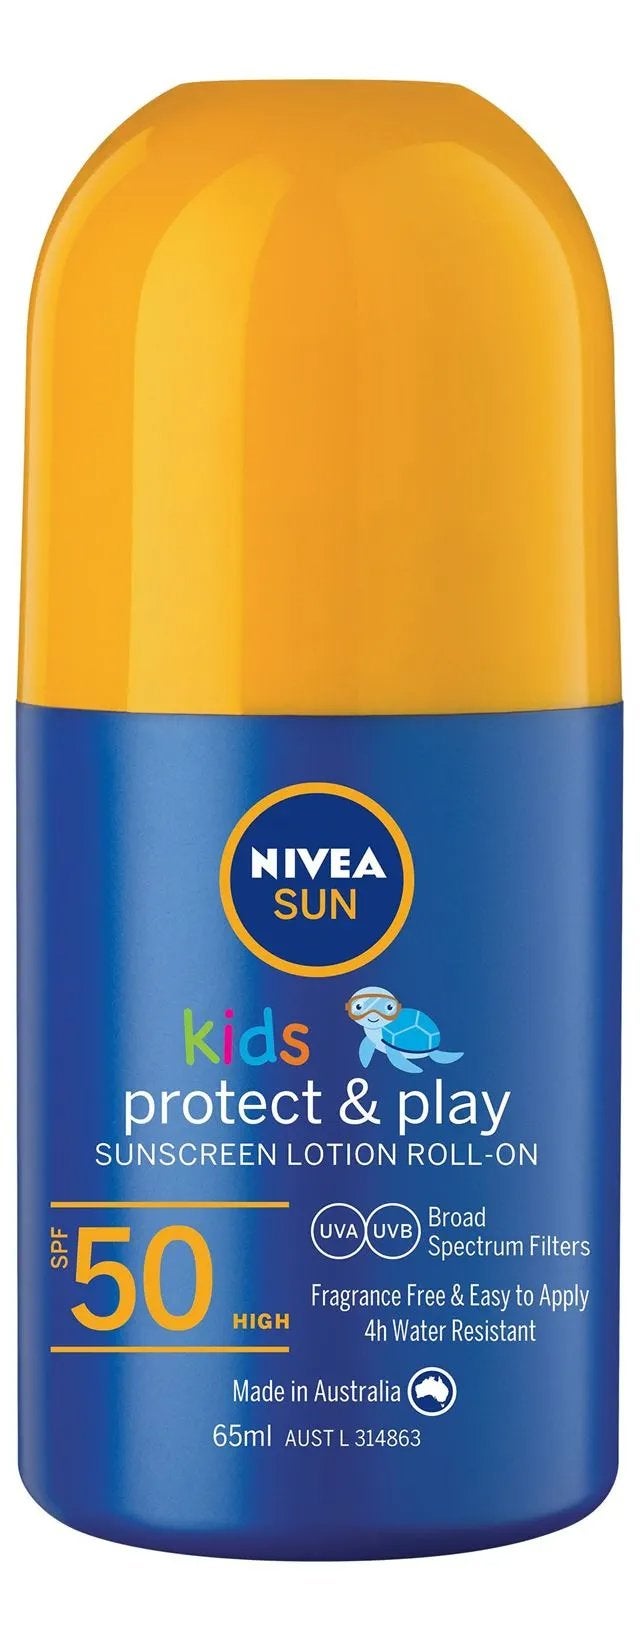 Nivea sunscreen review